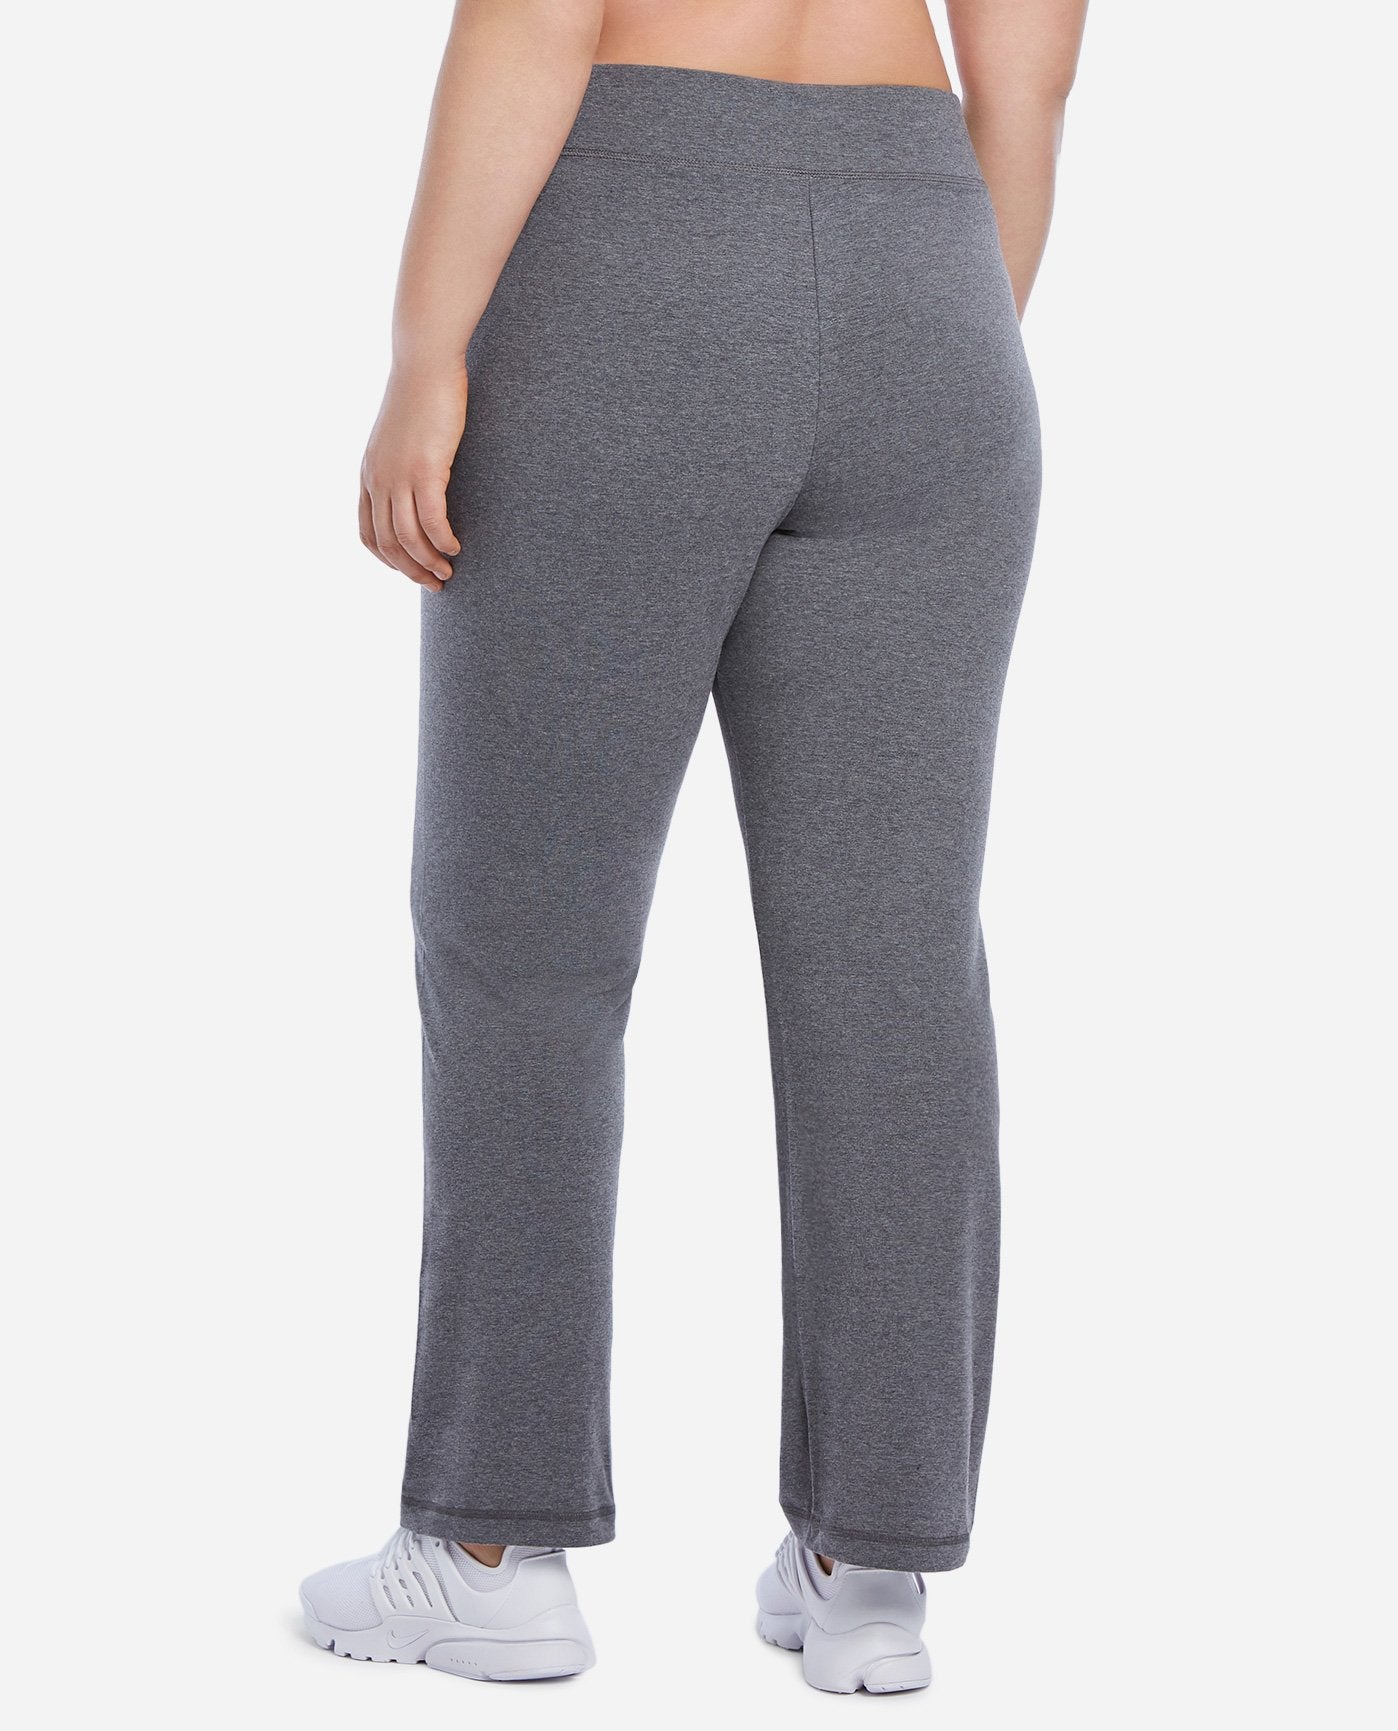 Danskin womens Yoga Pants - ShopStyle